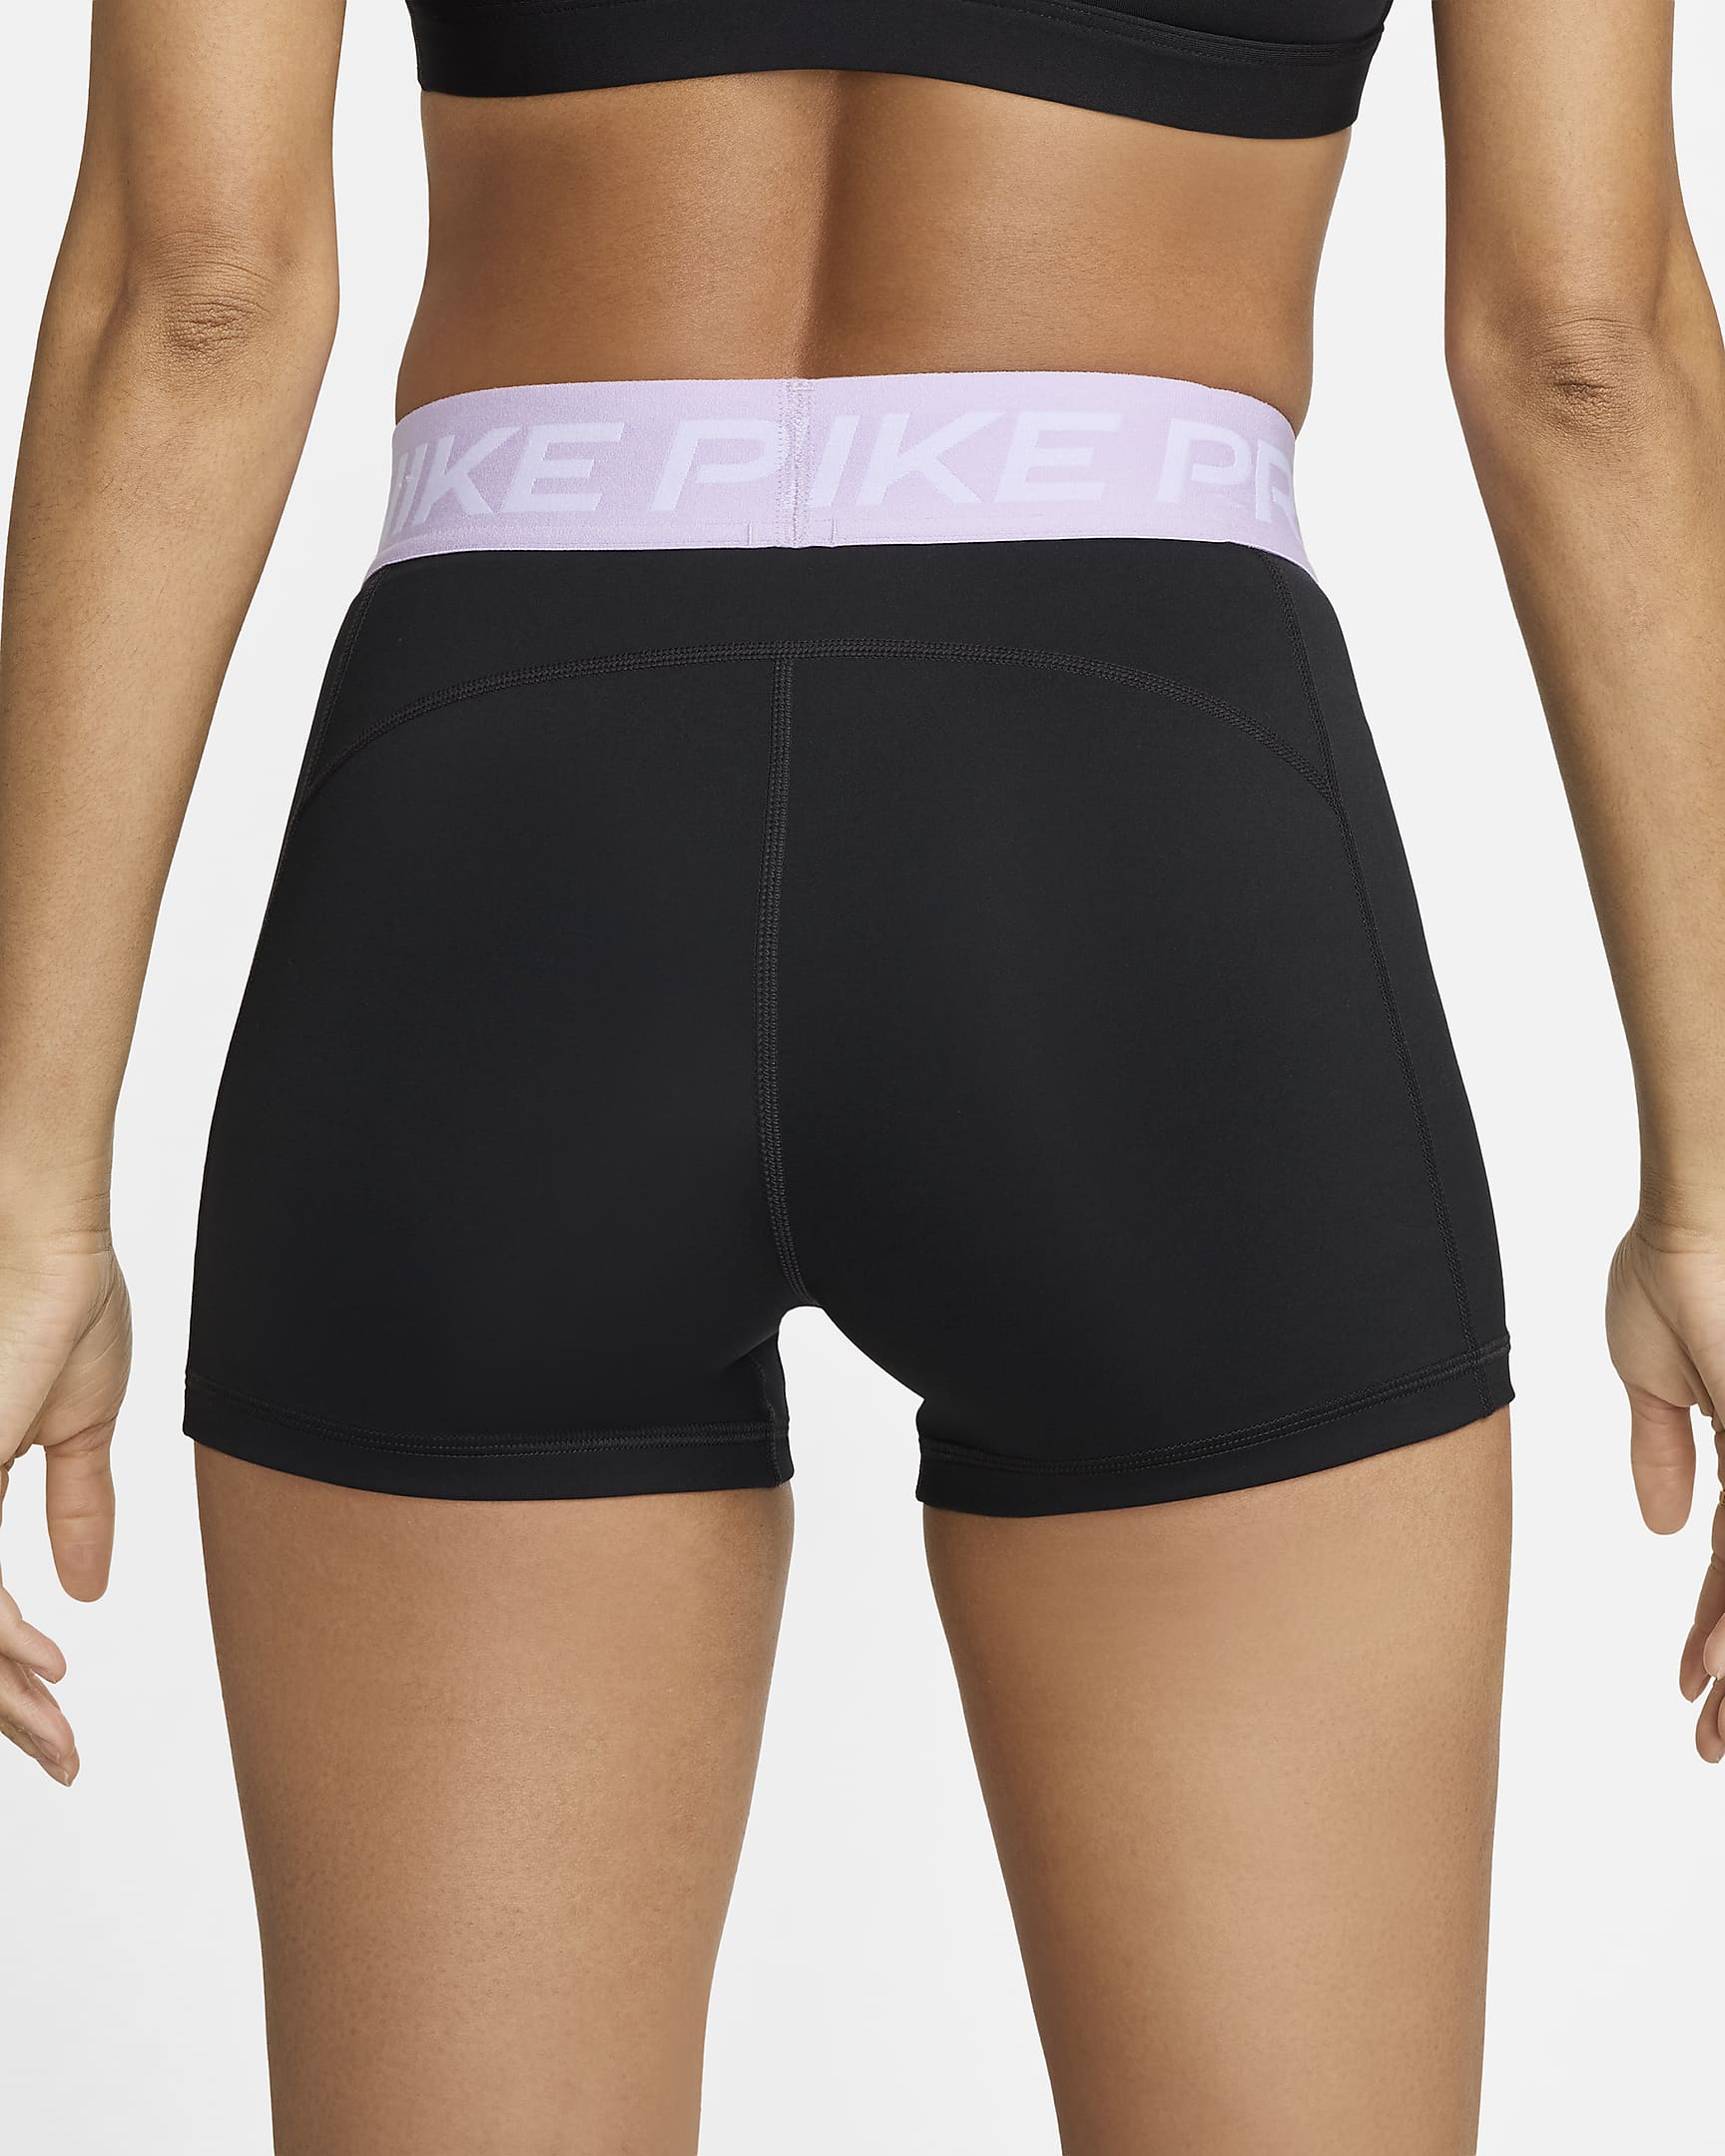  Nike Pro Spandex Shorts Women